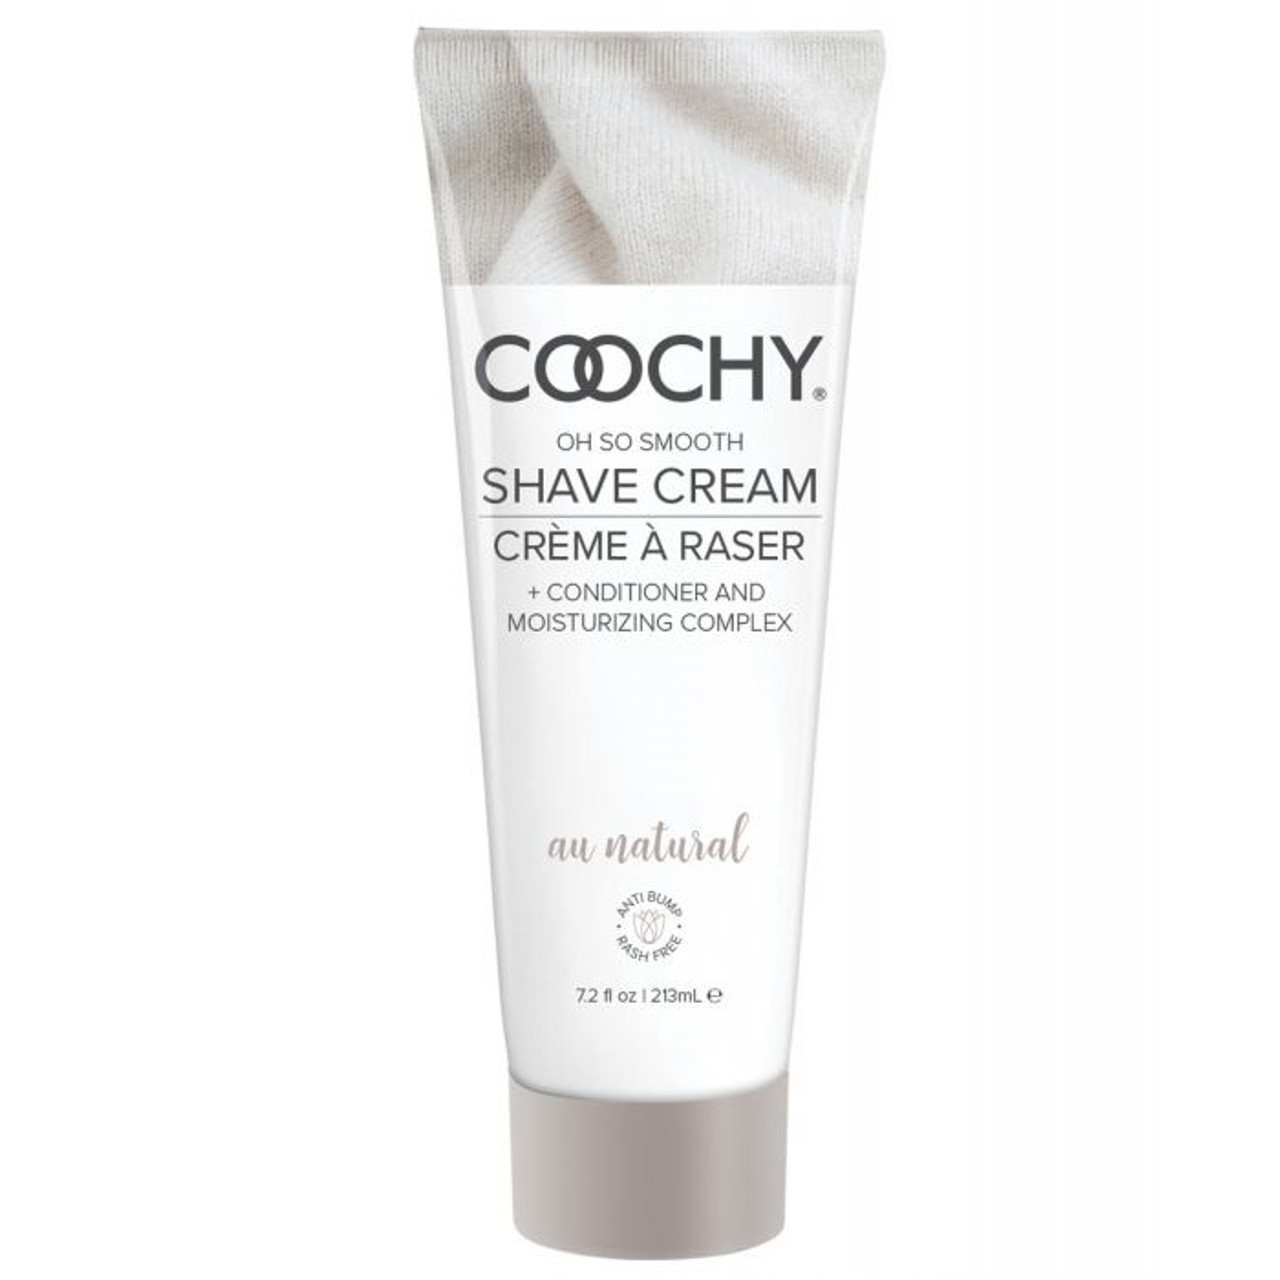 Coochy Oh So Smooth Shave Cream "Au Natural" - 7.2 oz